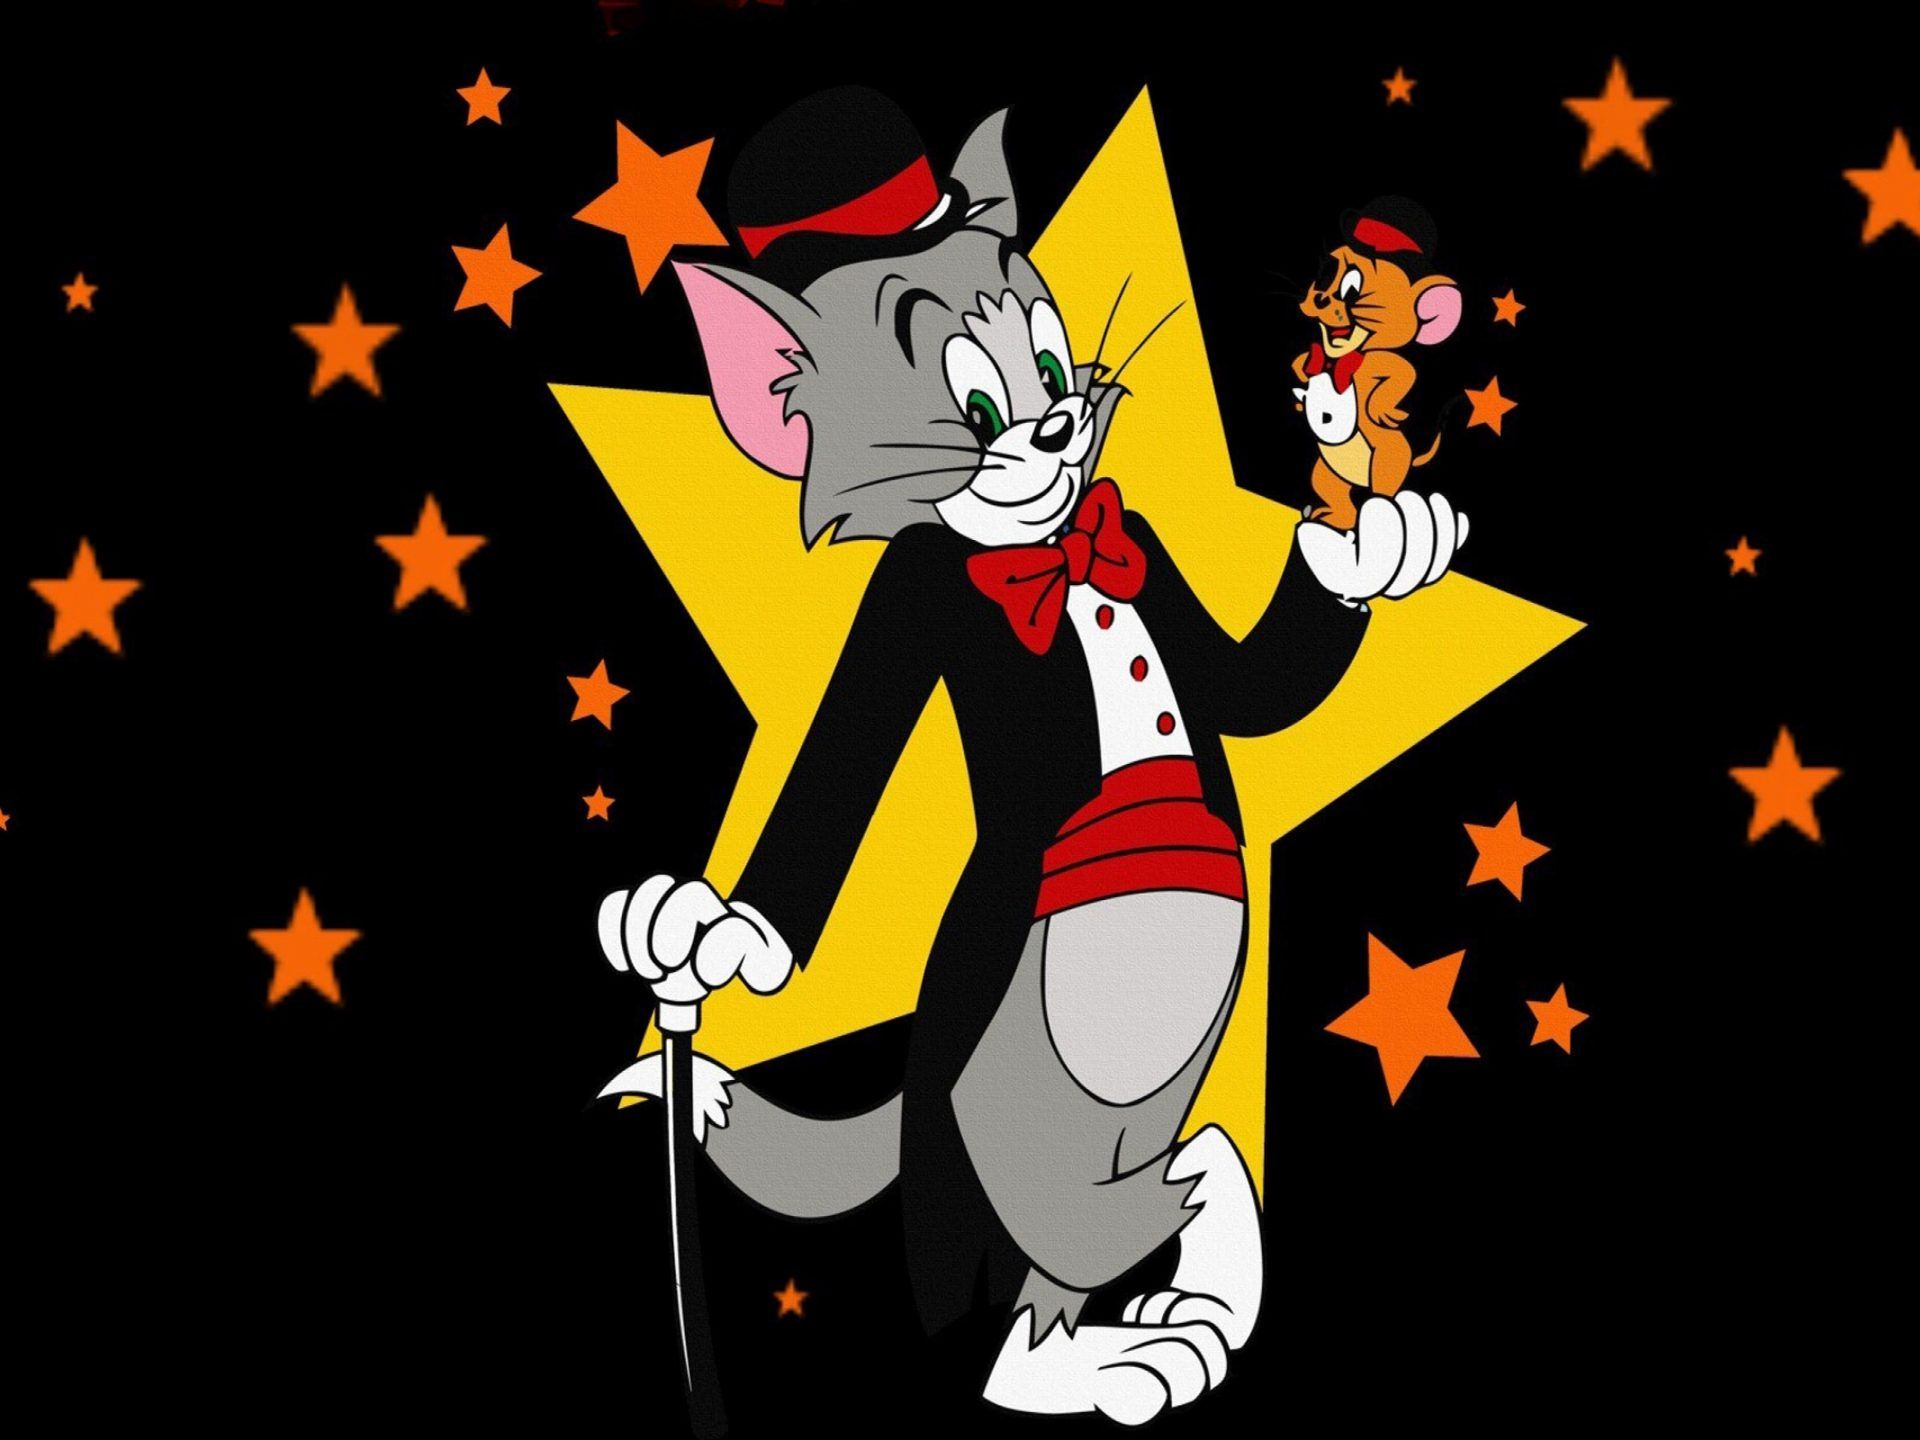 Tom and Jerry Wallpaper - EnJpg